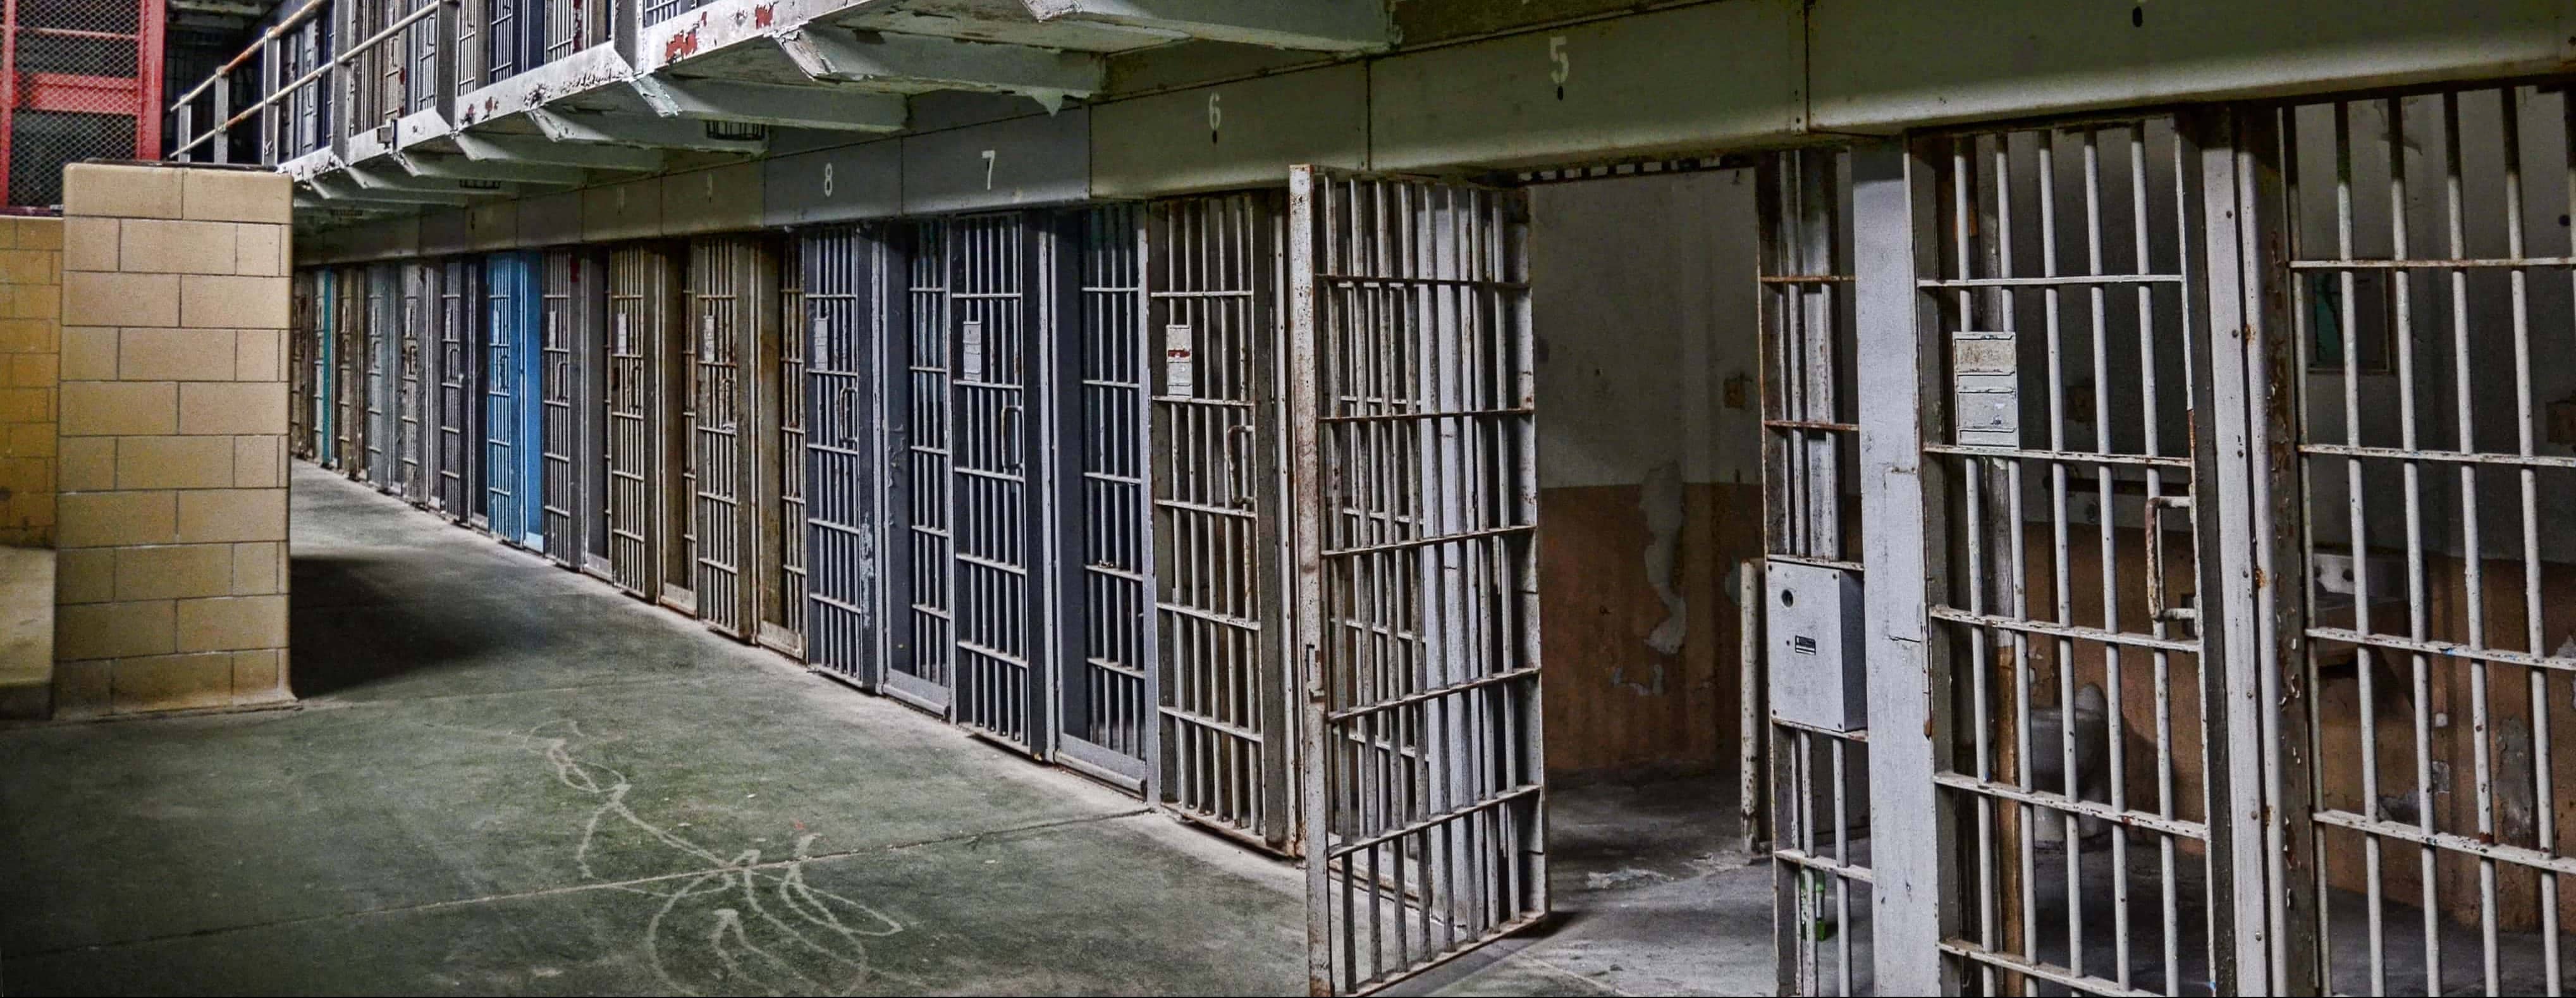 prison-jpg-16